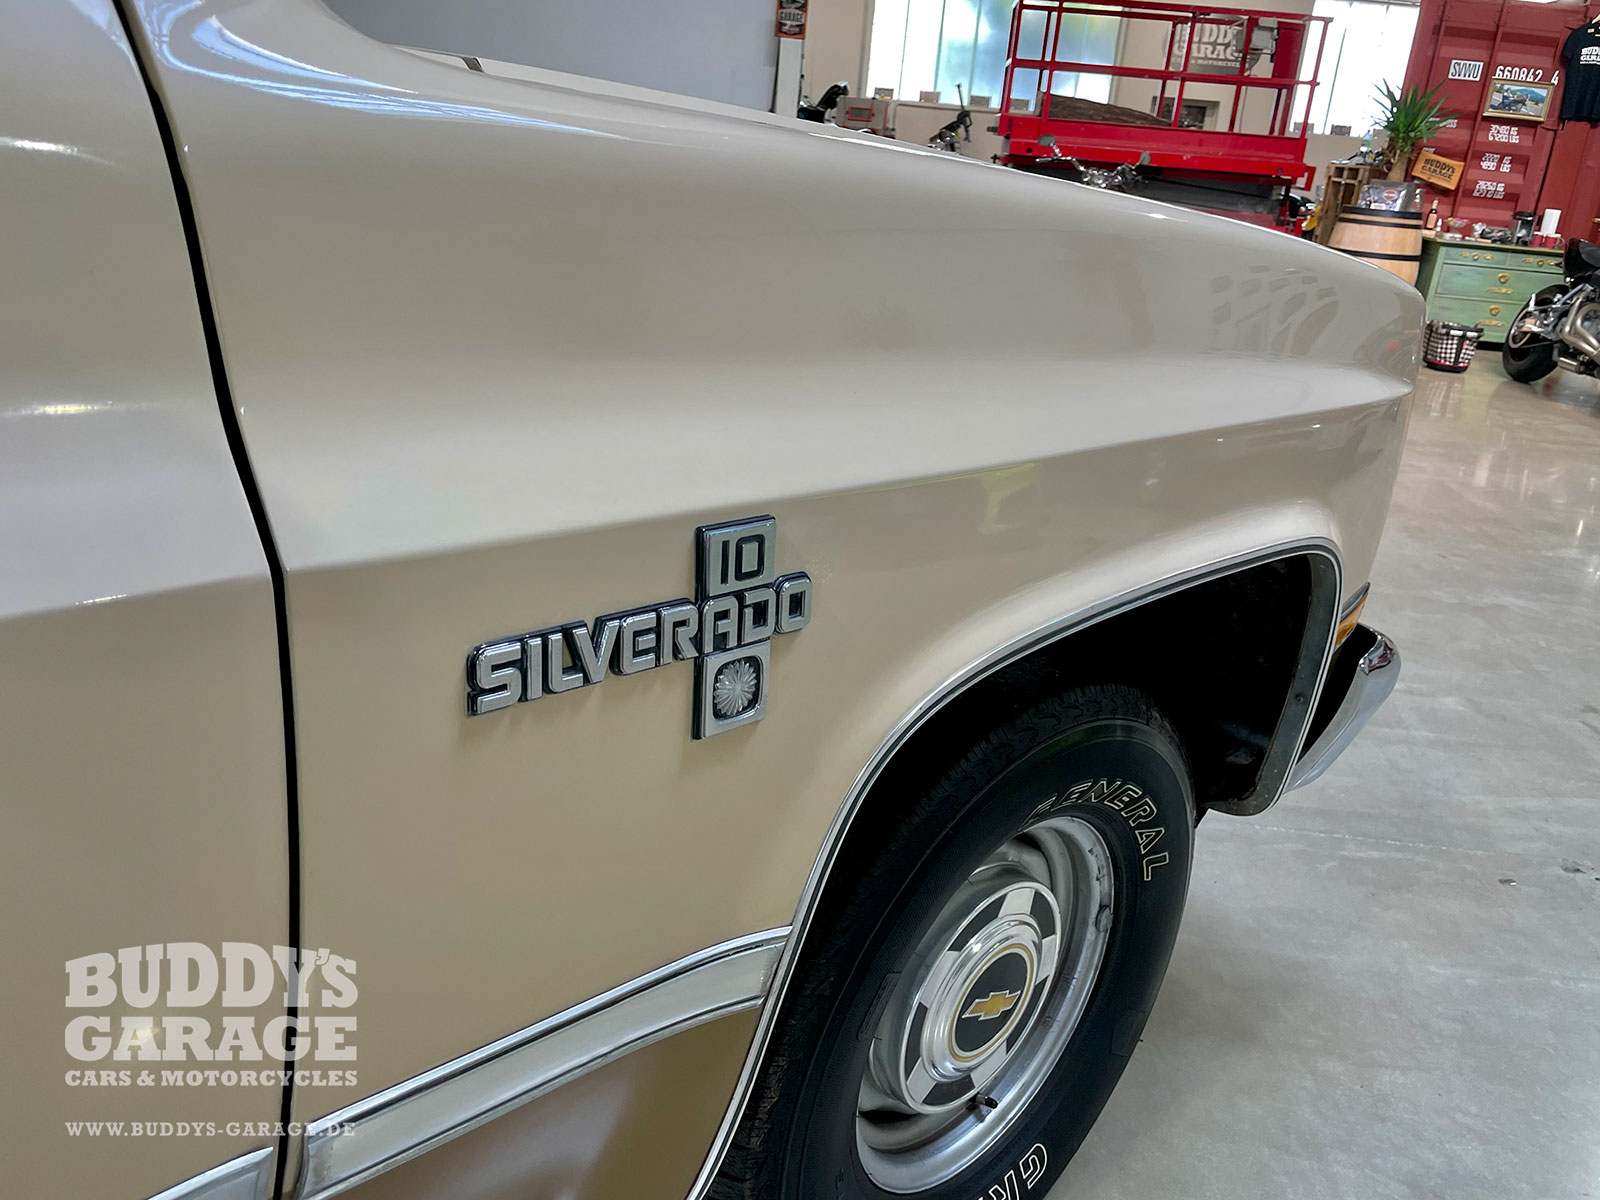 Chevrolet C-10 Silverado | Buddy's Garage Bad Oeynhausen